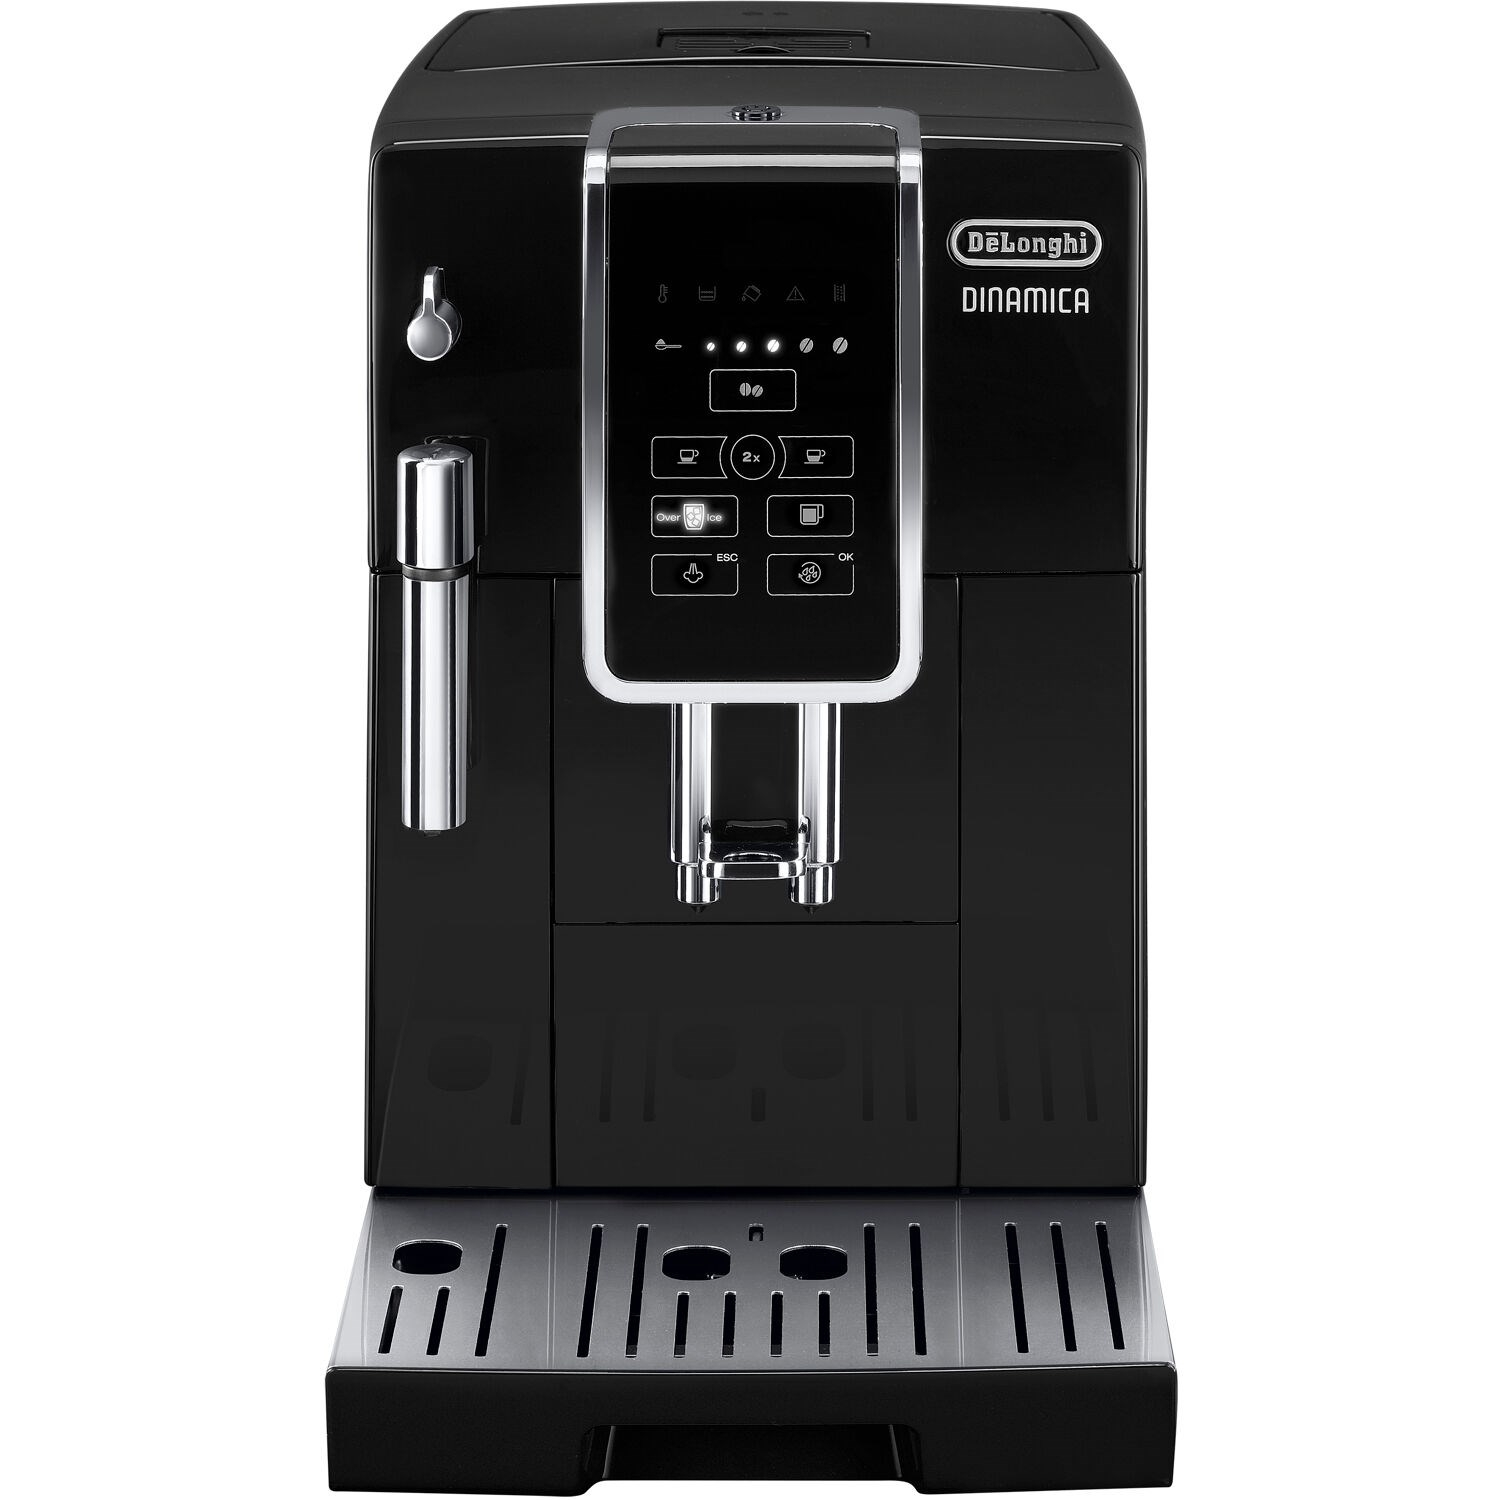 Delonghi Dinamica, best super automatic espresso machine under $1000